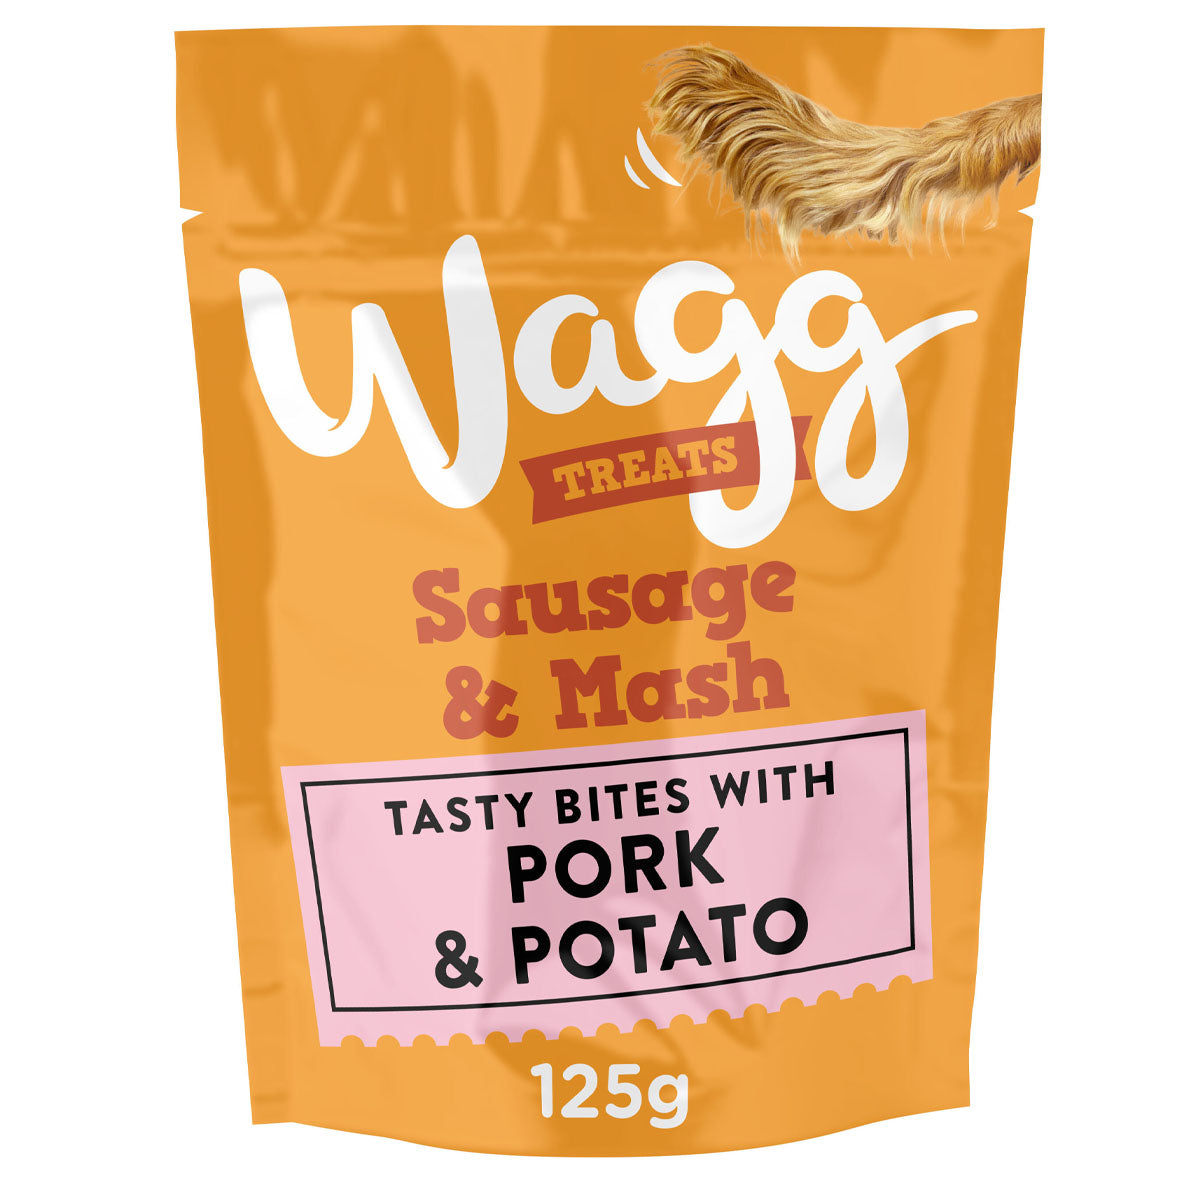 Wagg - Sausage and Mash Treats - 125g - Continental Food Store